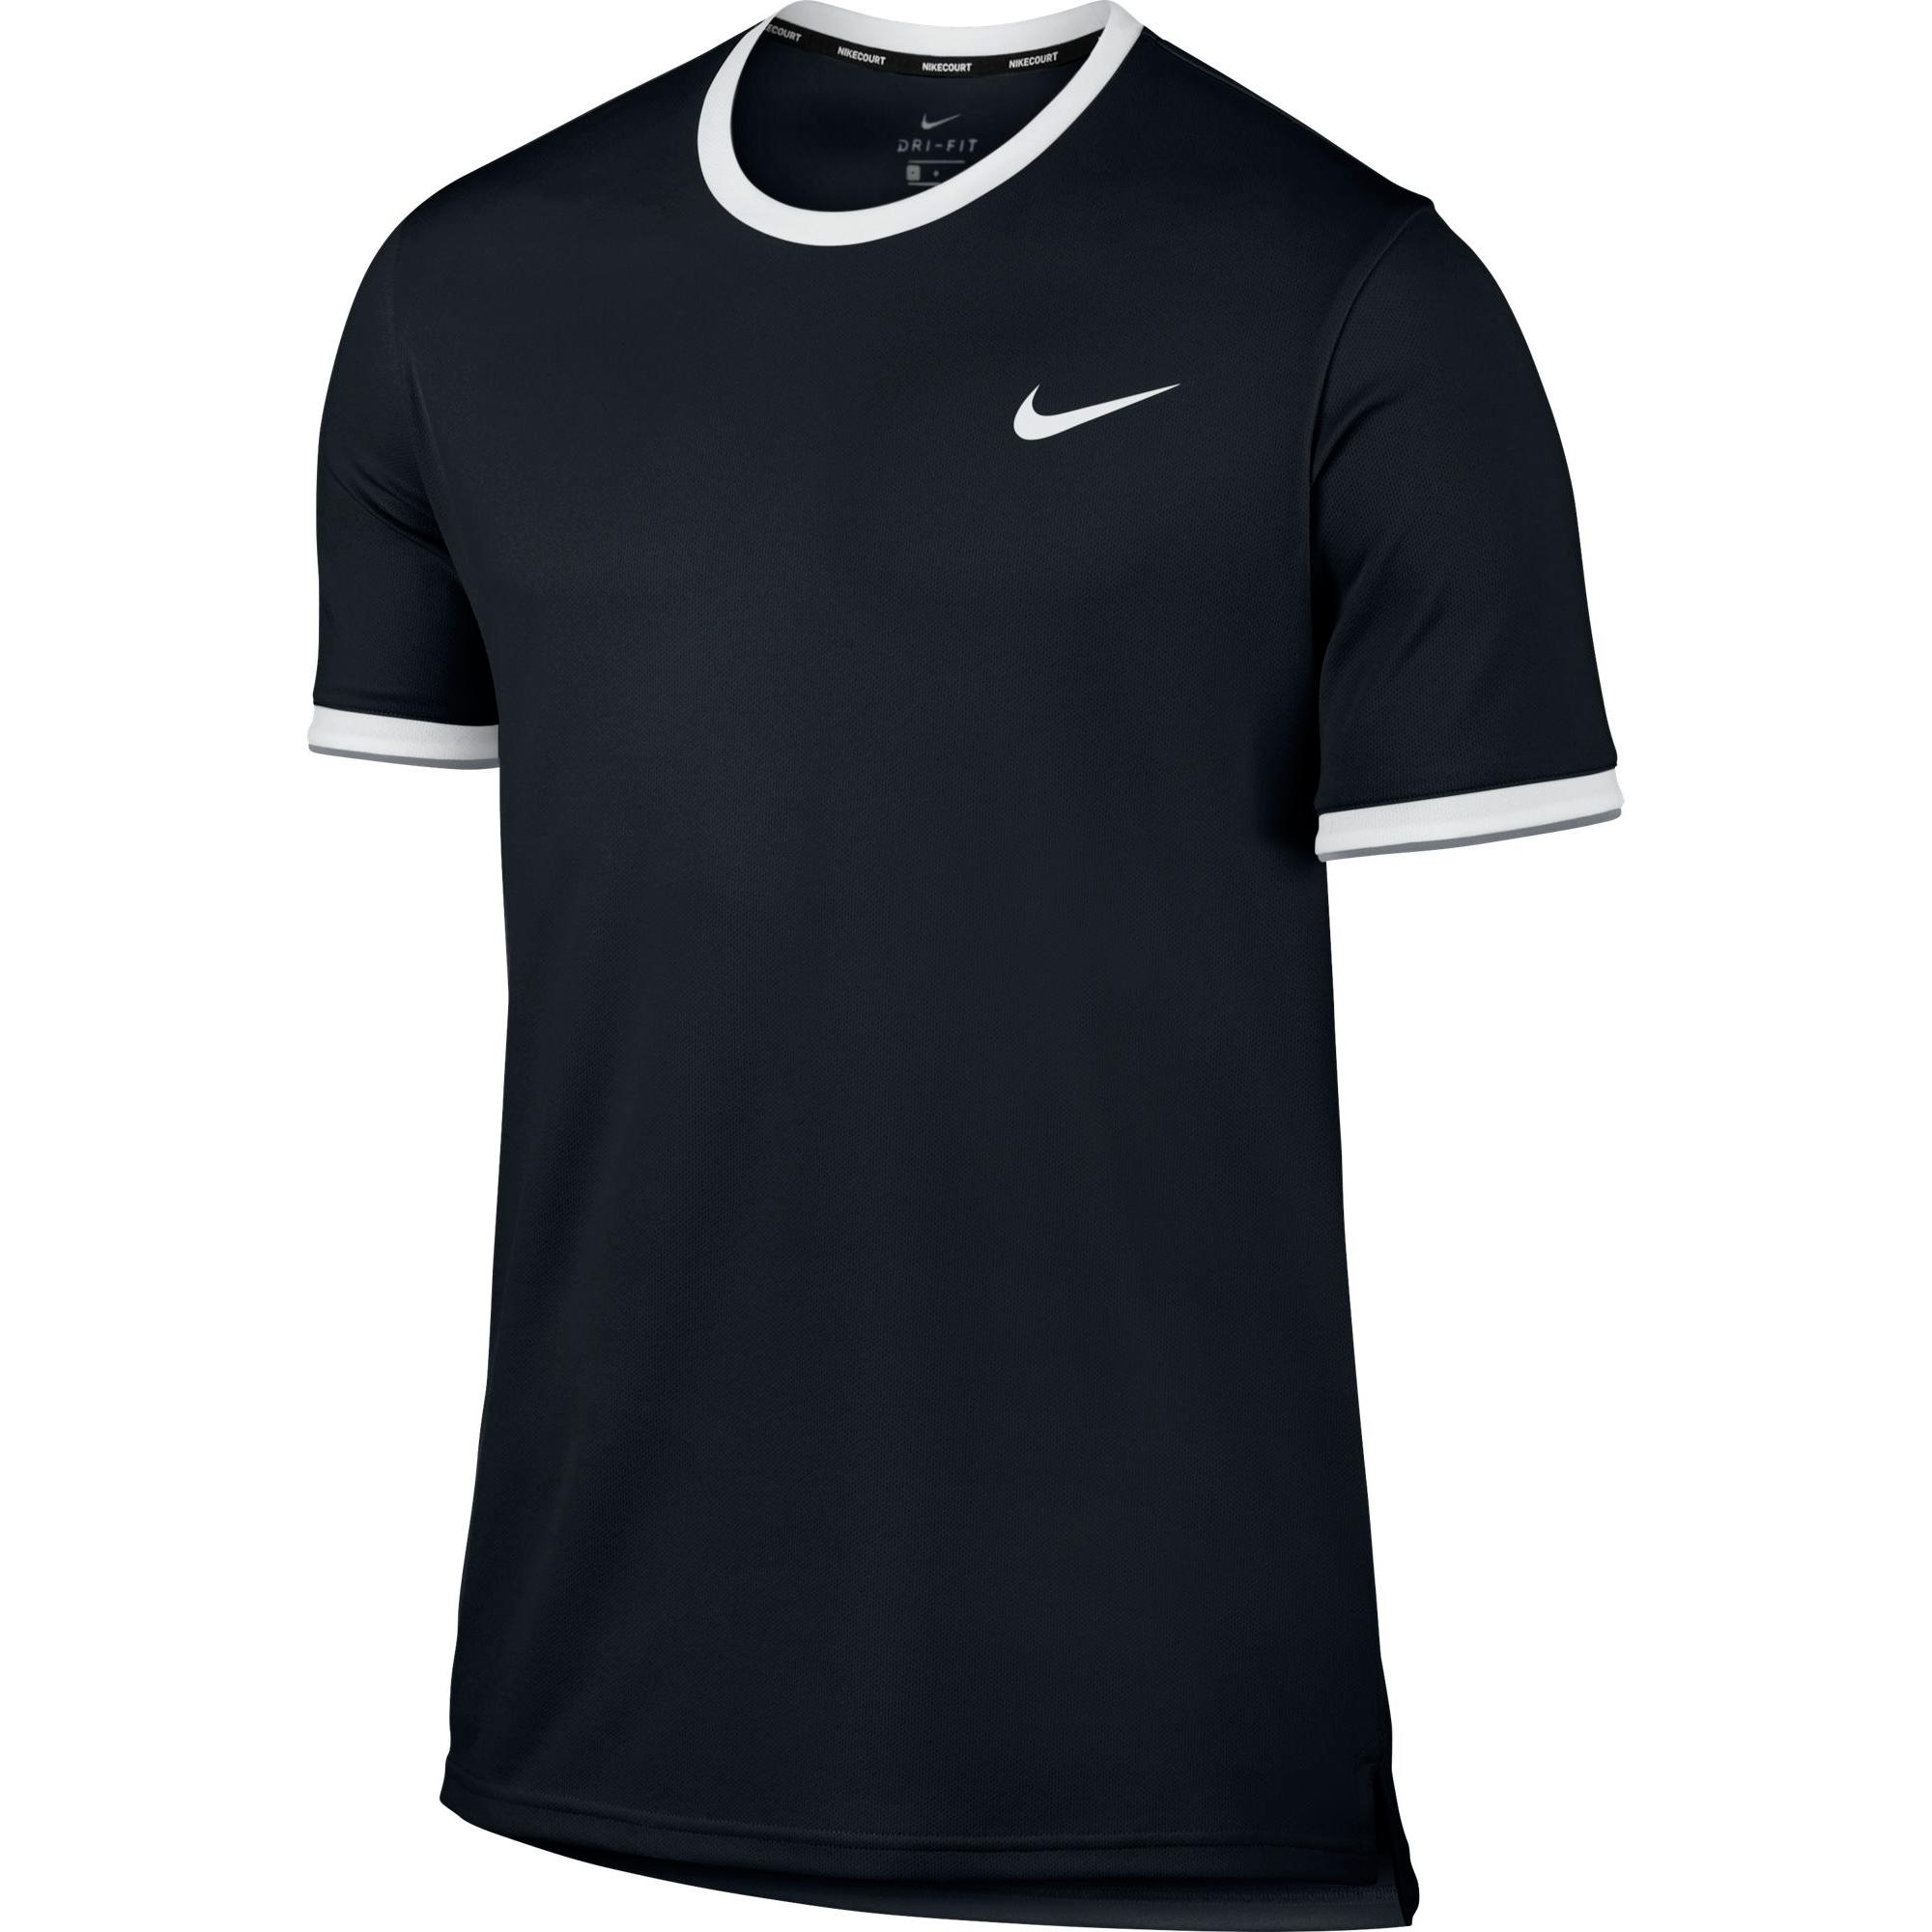 Nike Mens Court Dry Tennis Top - Black - Tennisnuts.com